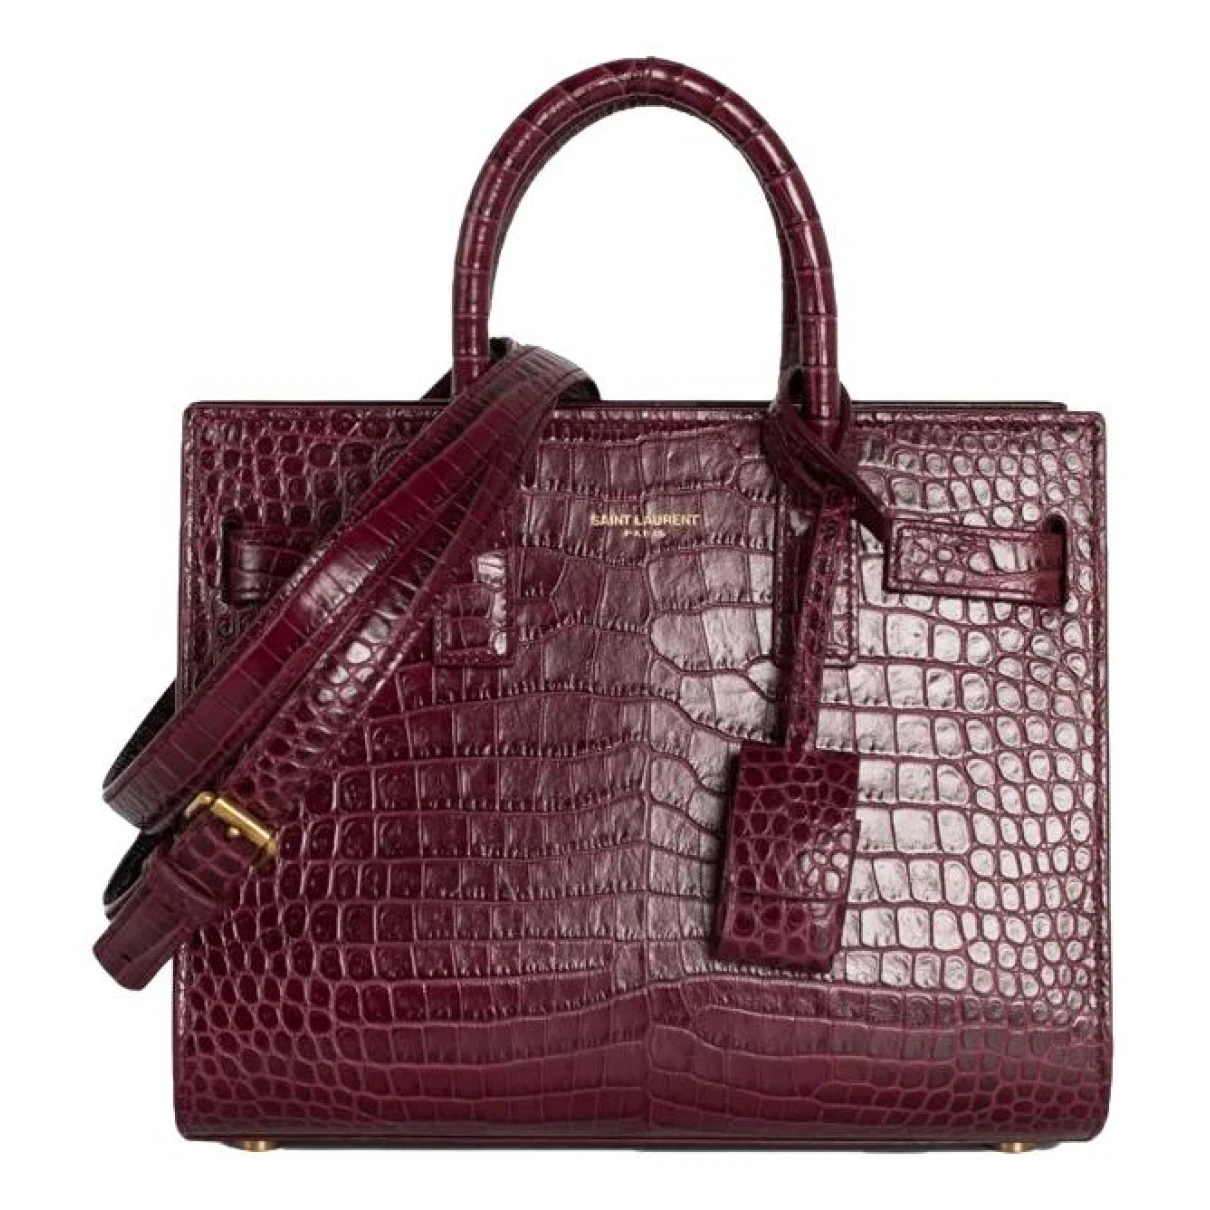 Pre-owned Saint Laurent Sac De Jour Leather Handbag In Burgundy